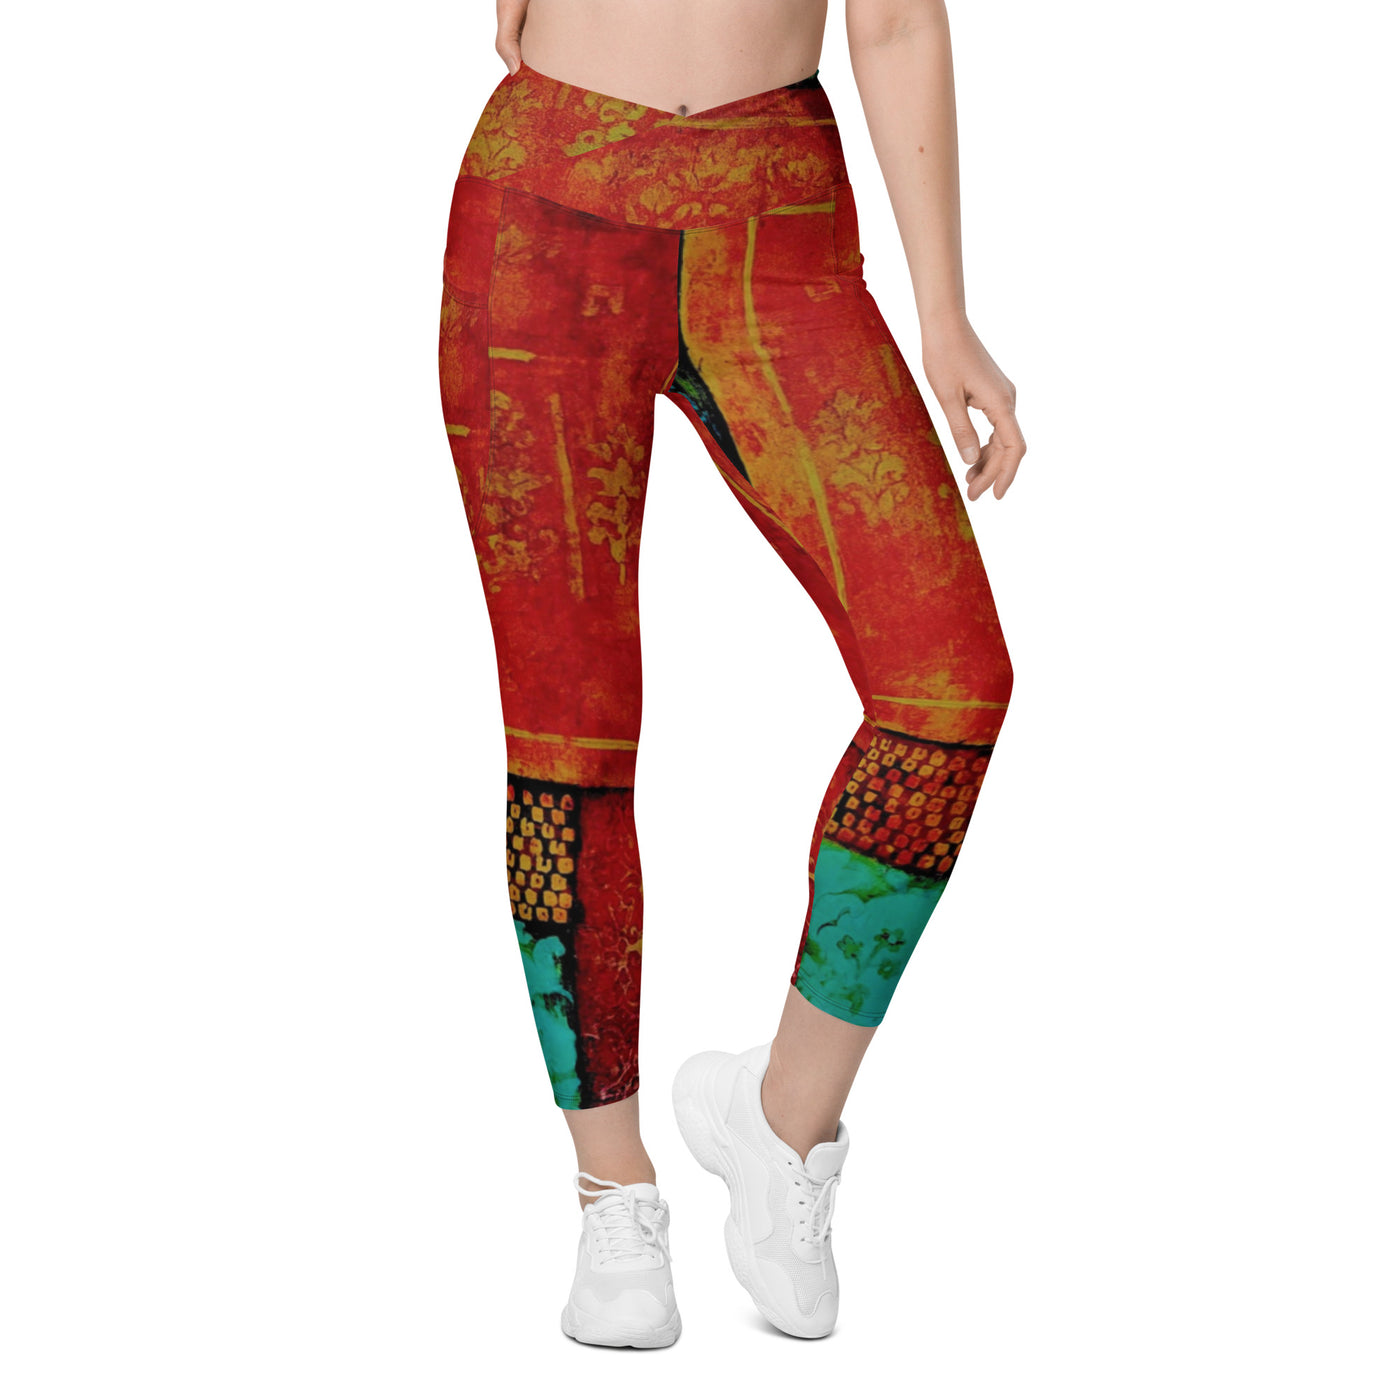 CheyenneeMagicWarrior Crossover leggings with pockets